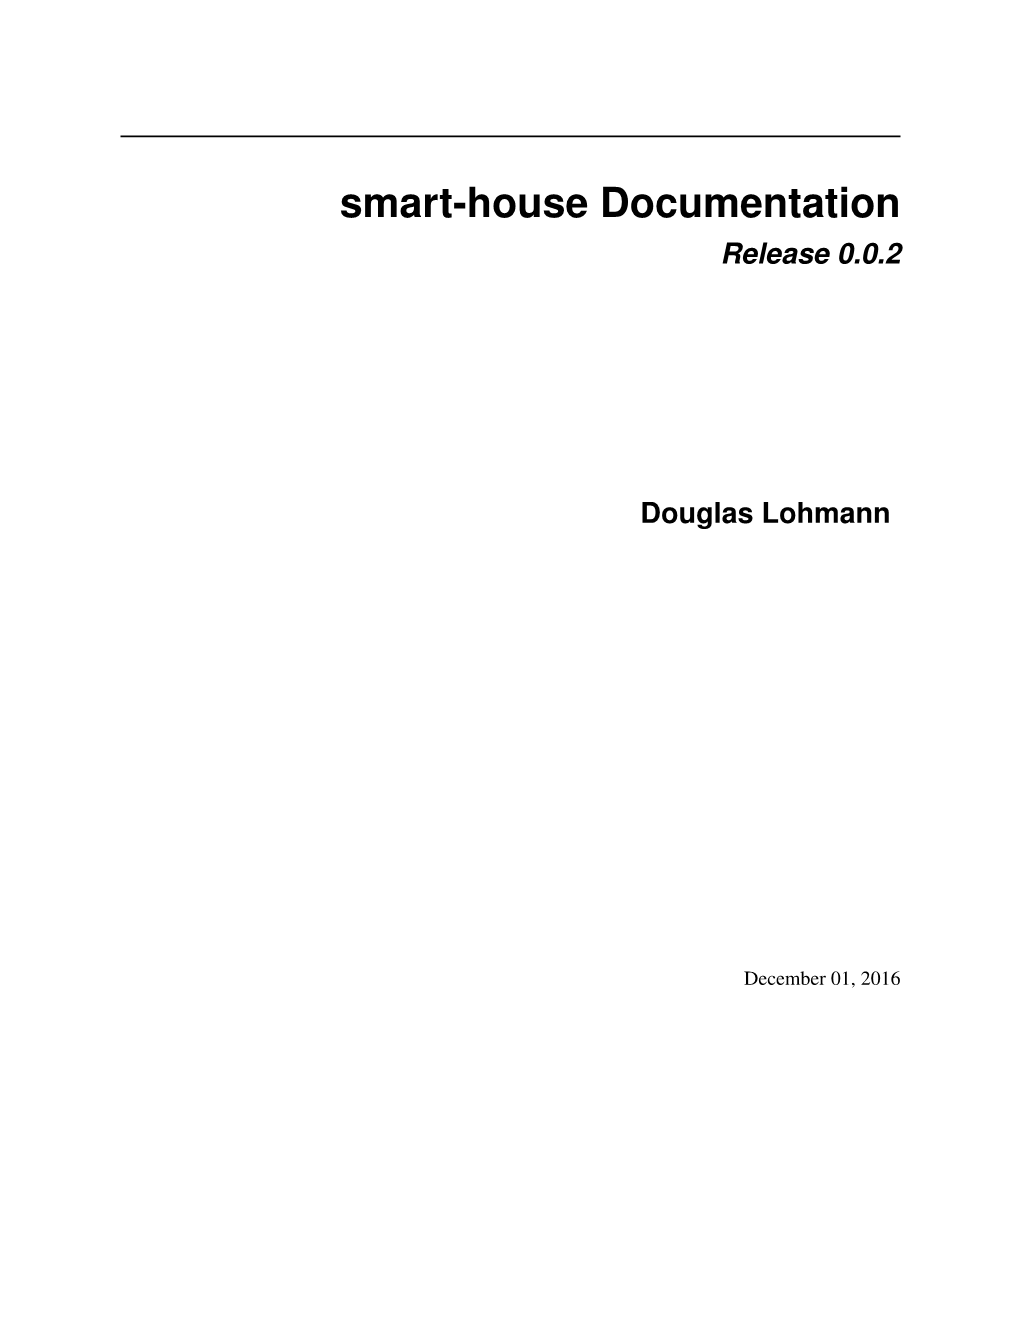 Smart-House Documentation Release 0.0.2